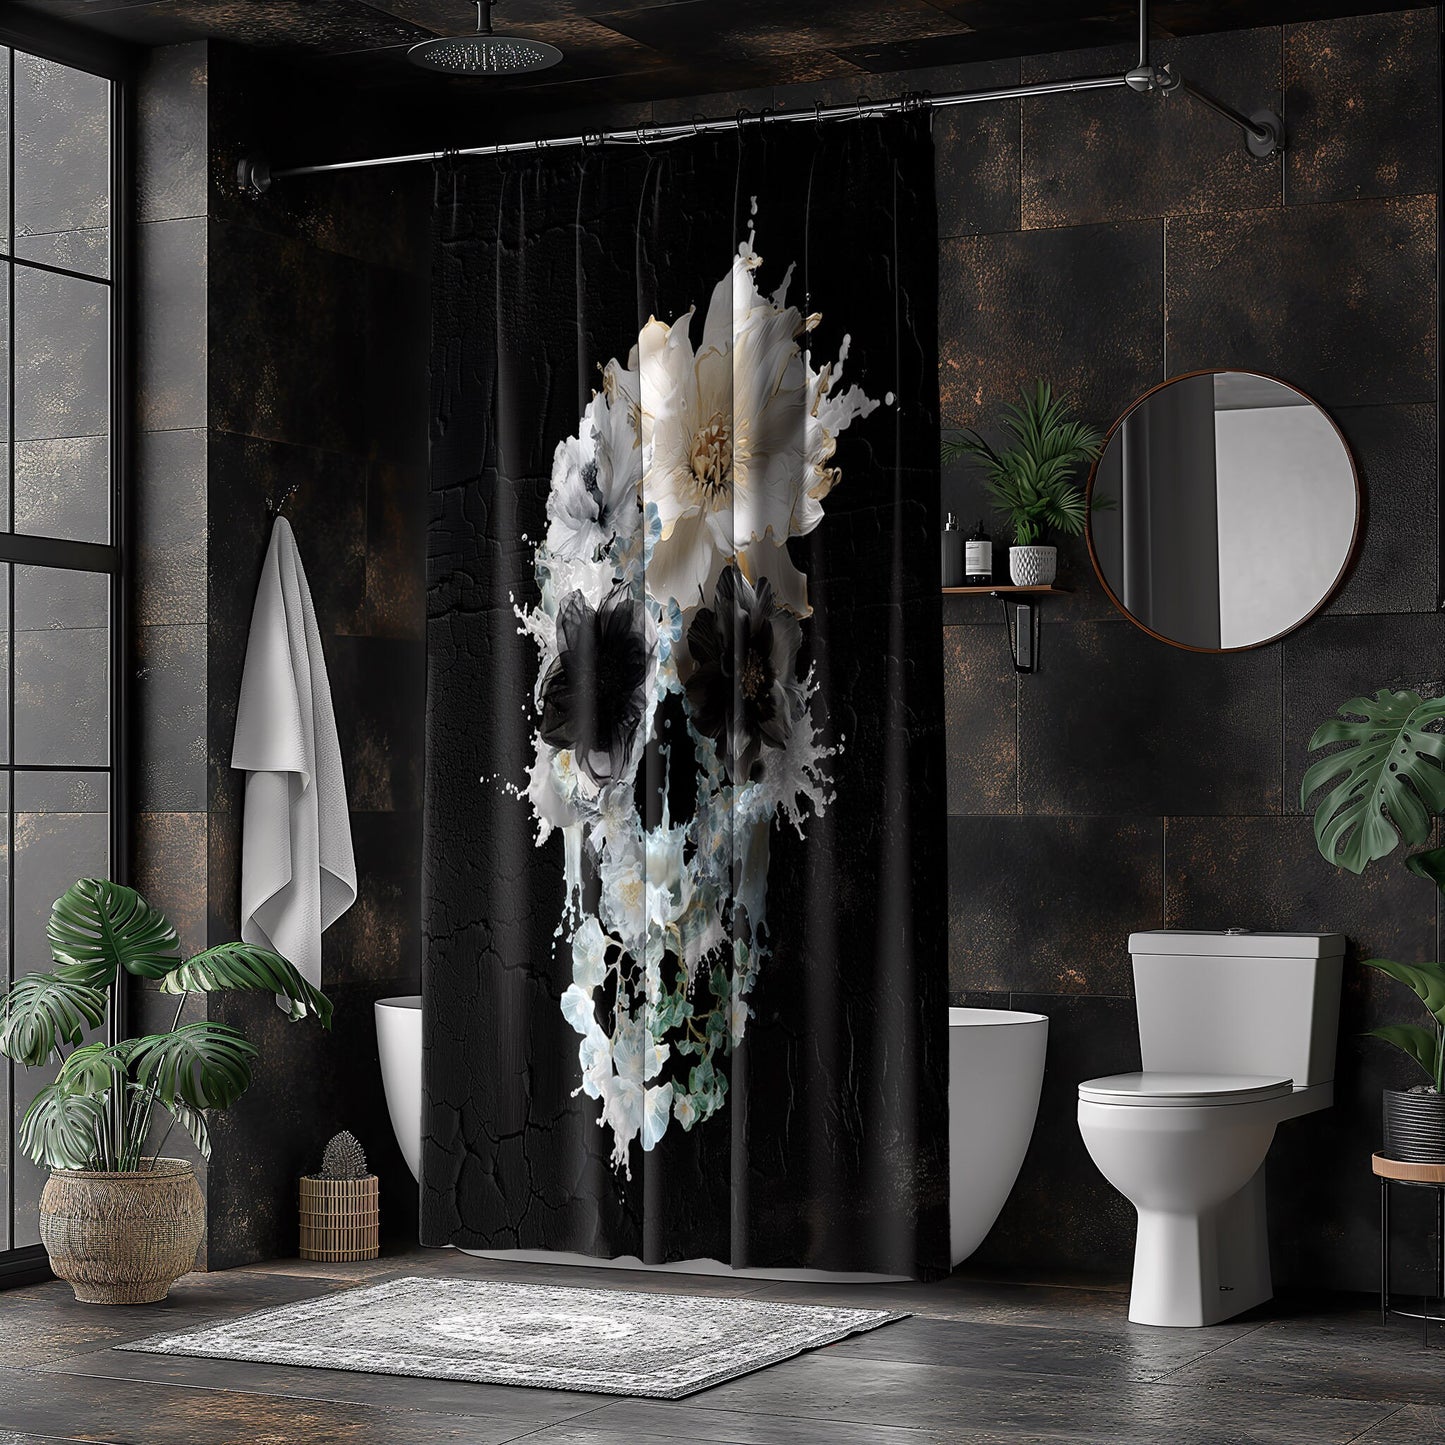 Bloom Skull Shower Curtain, Boho Shower Curtain Bathroom Decor, Gothic Sugar Skull Shower Curtain Home Decor